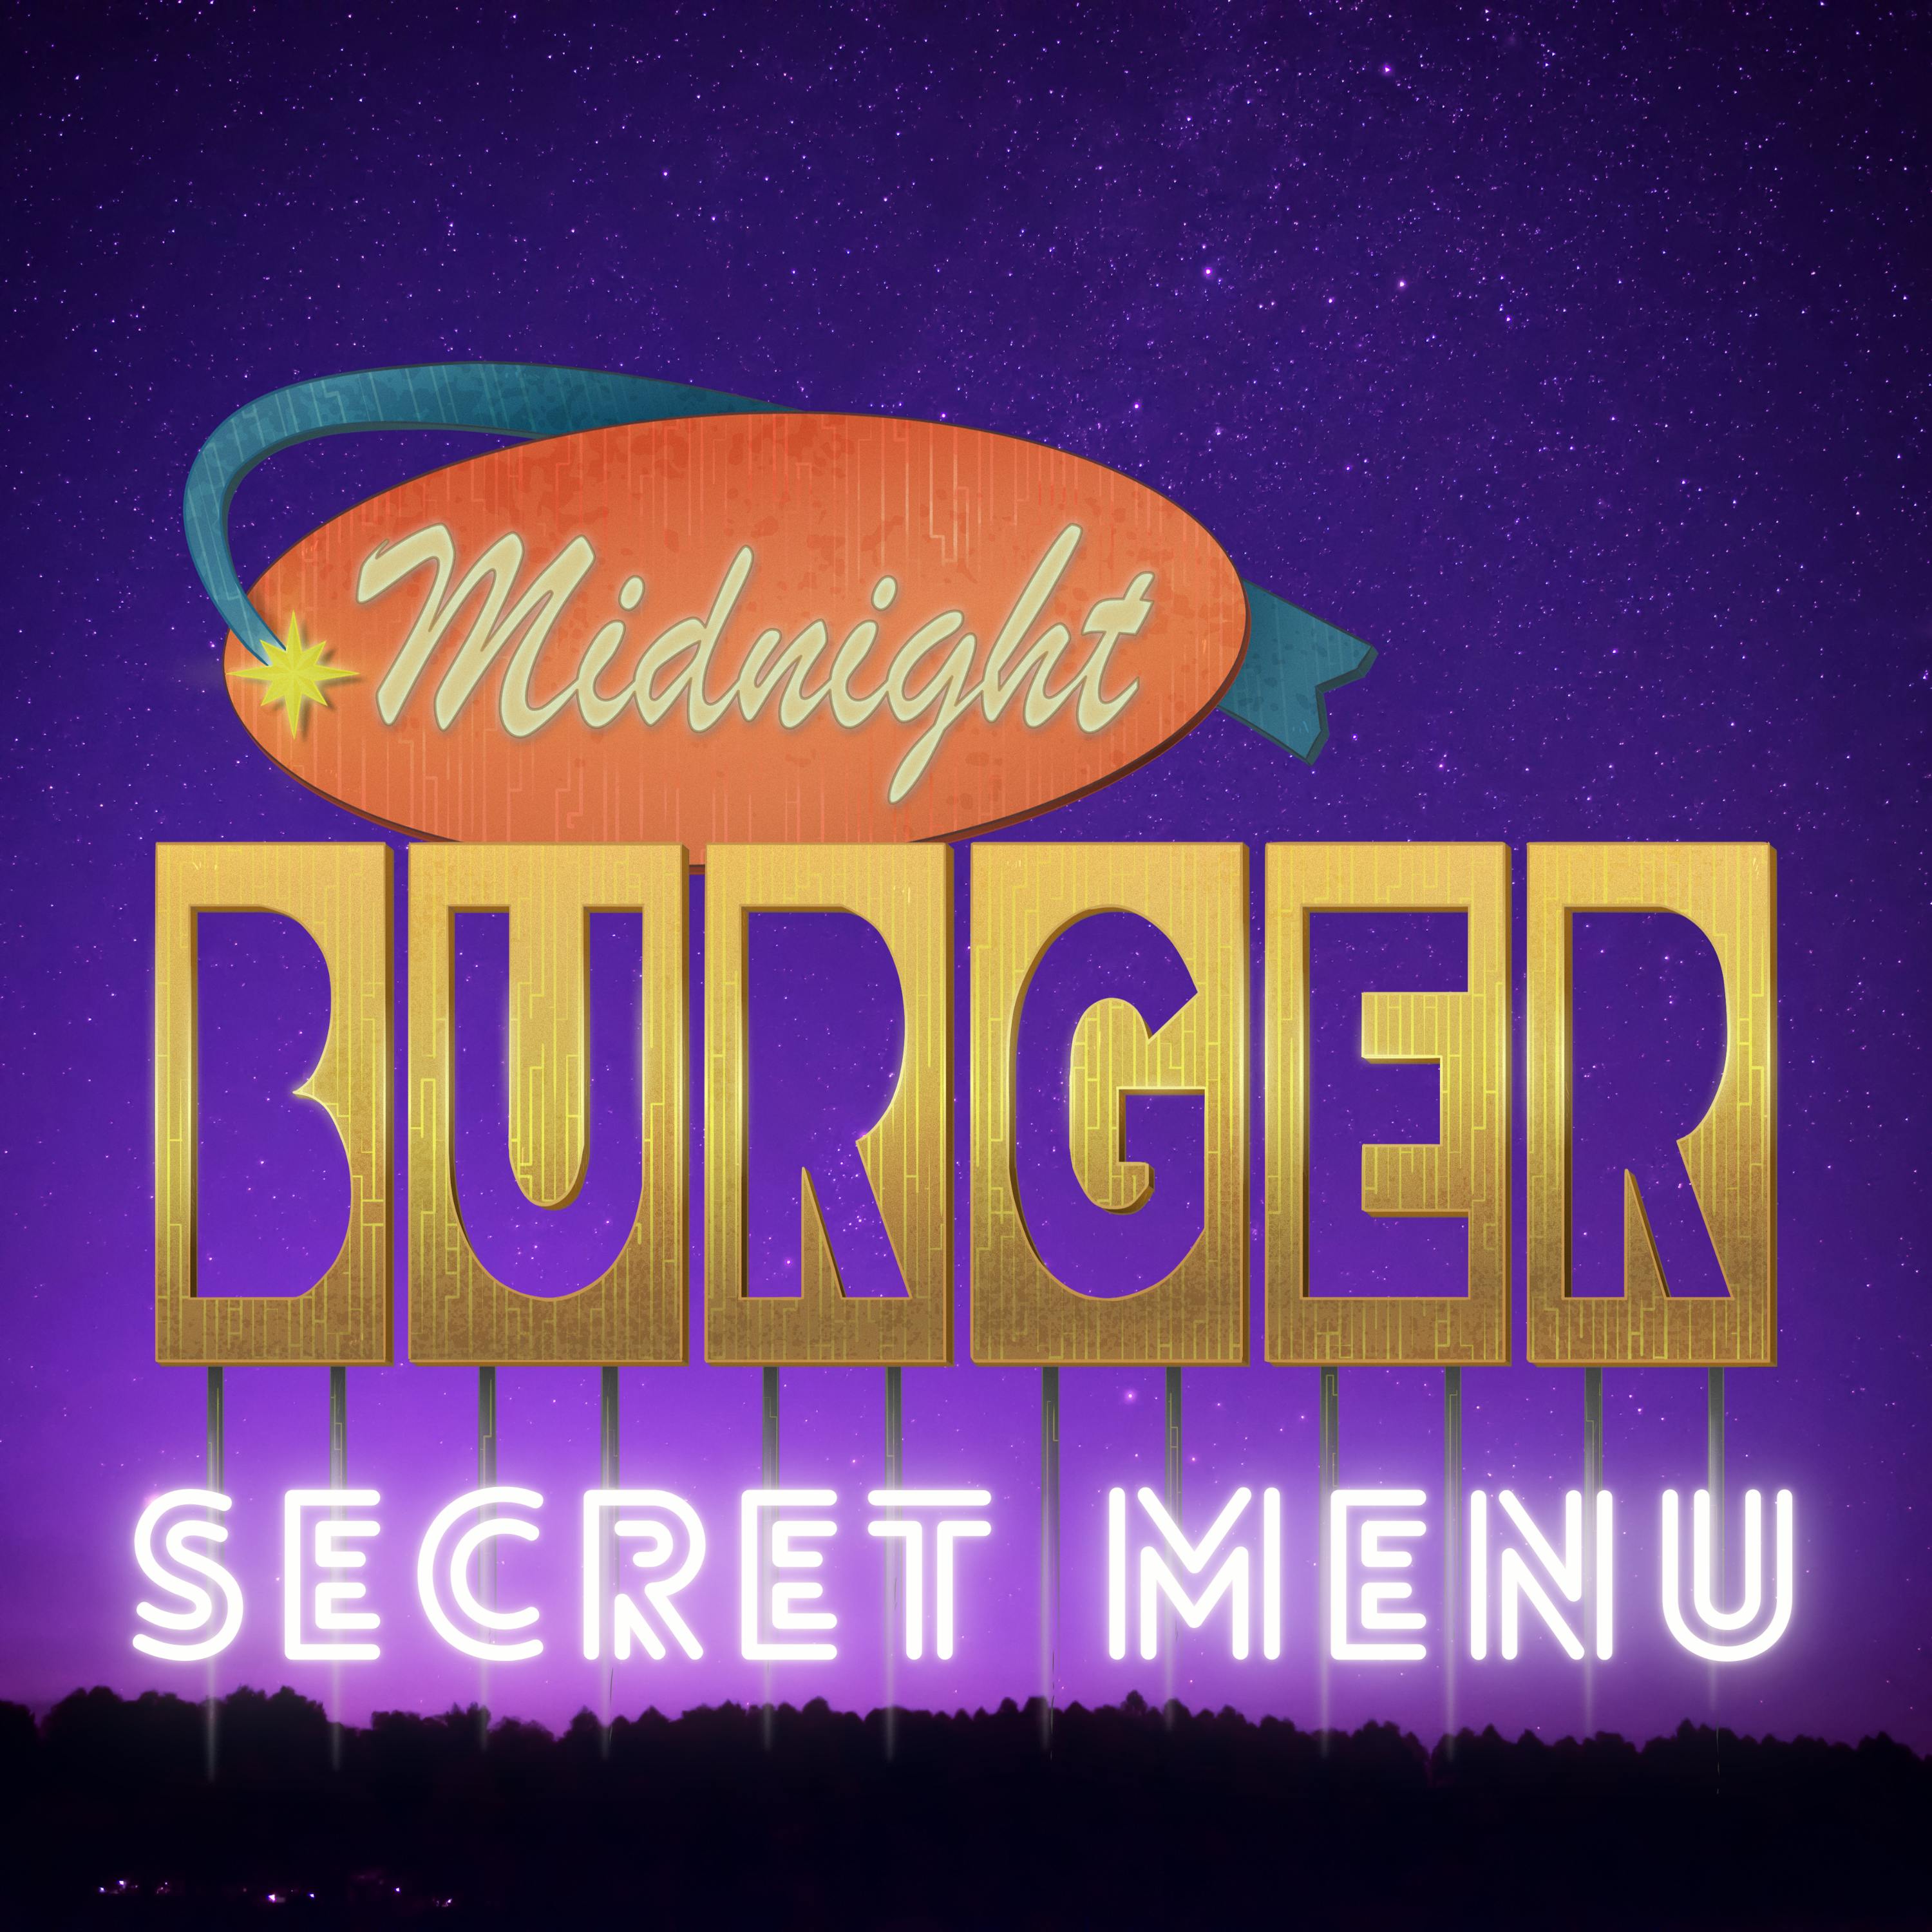 The Midnight Burger Secret Menu! podcast tile